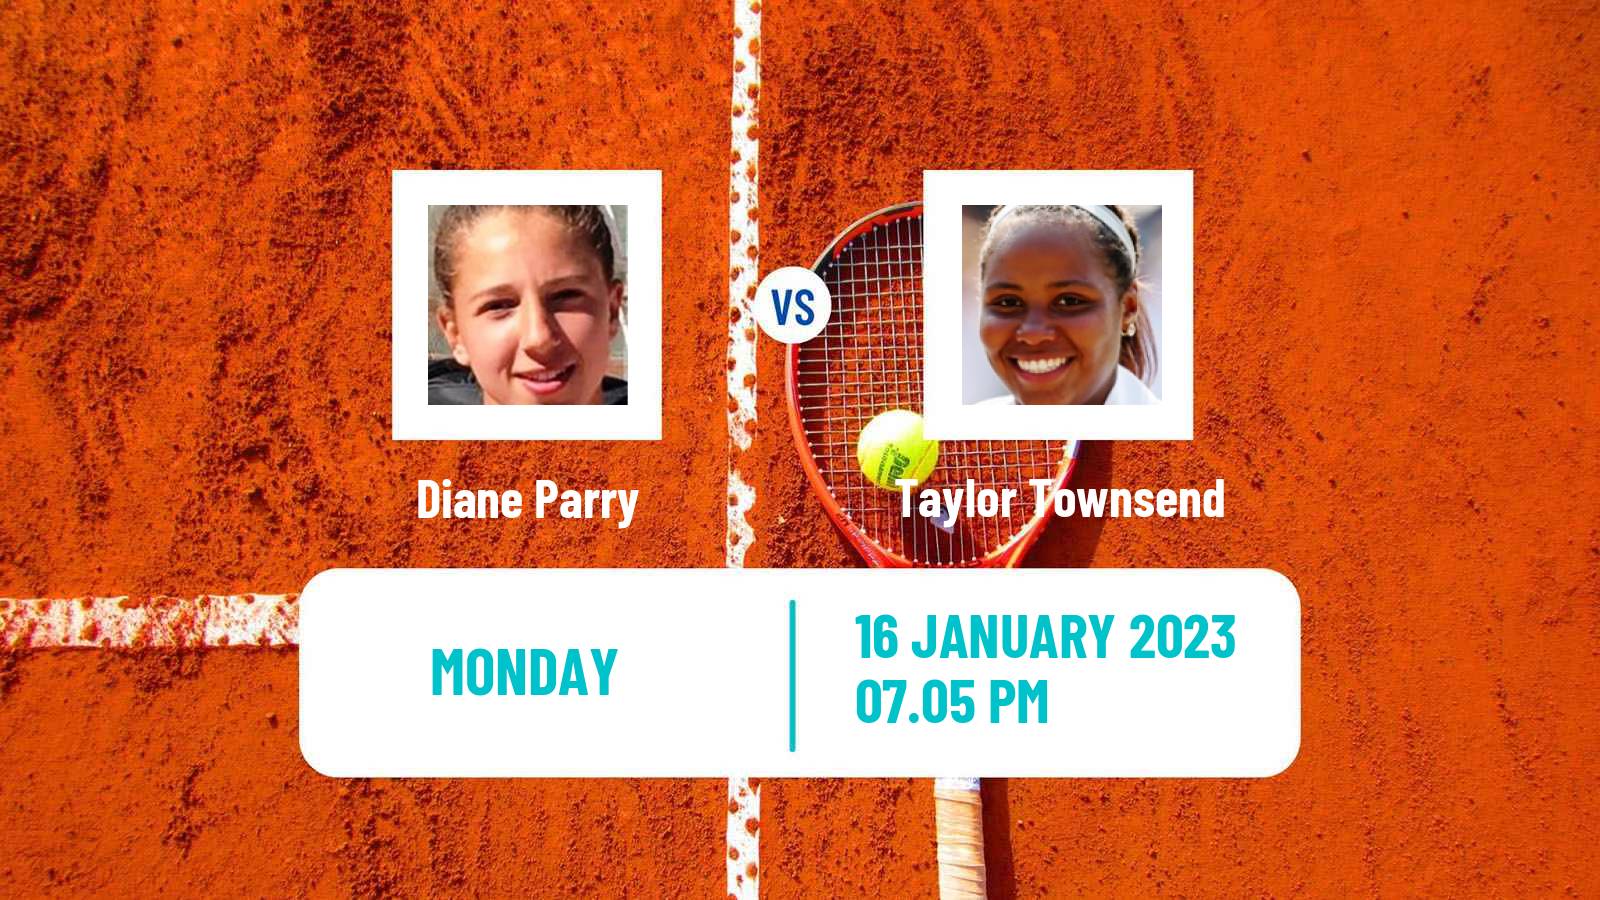 Tennis WTA Australian Open Diane Parry - Taylor Townsend